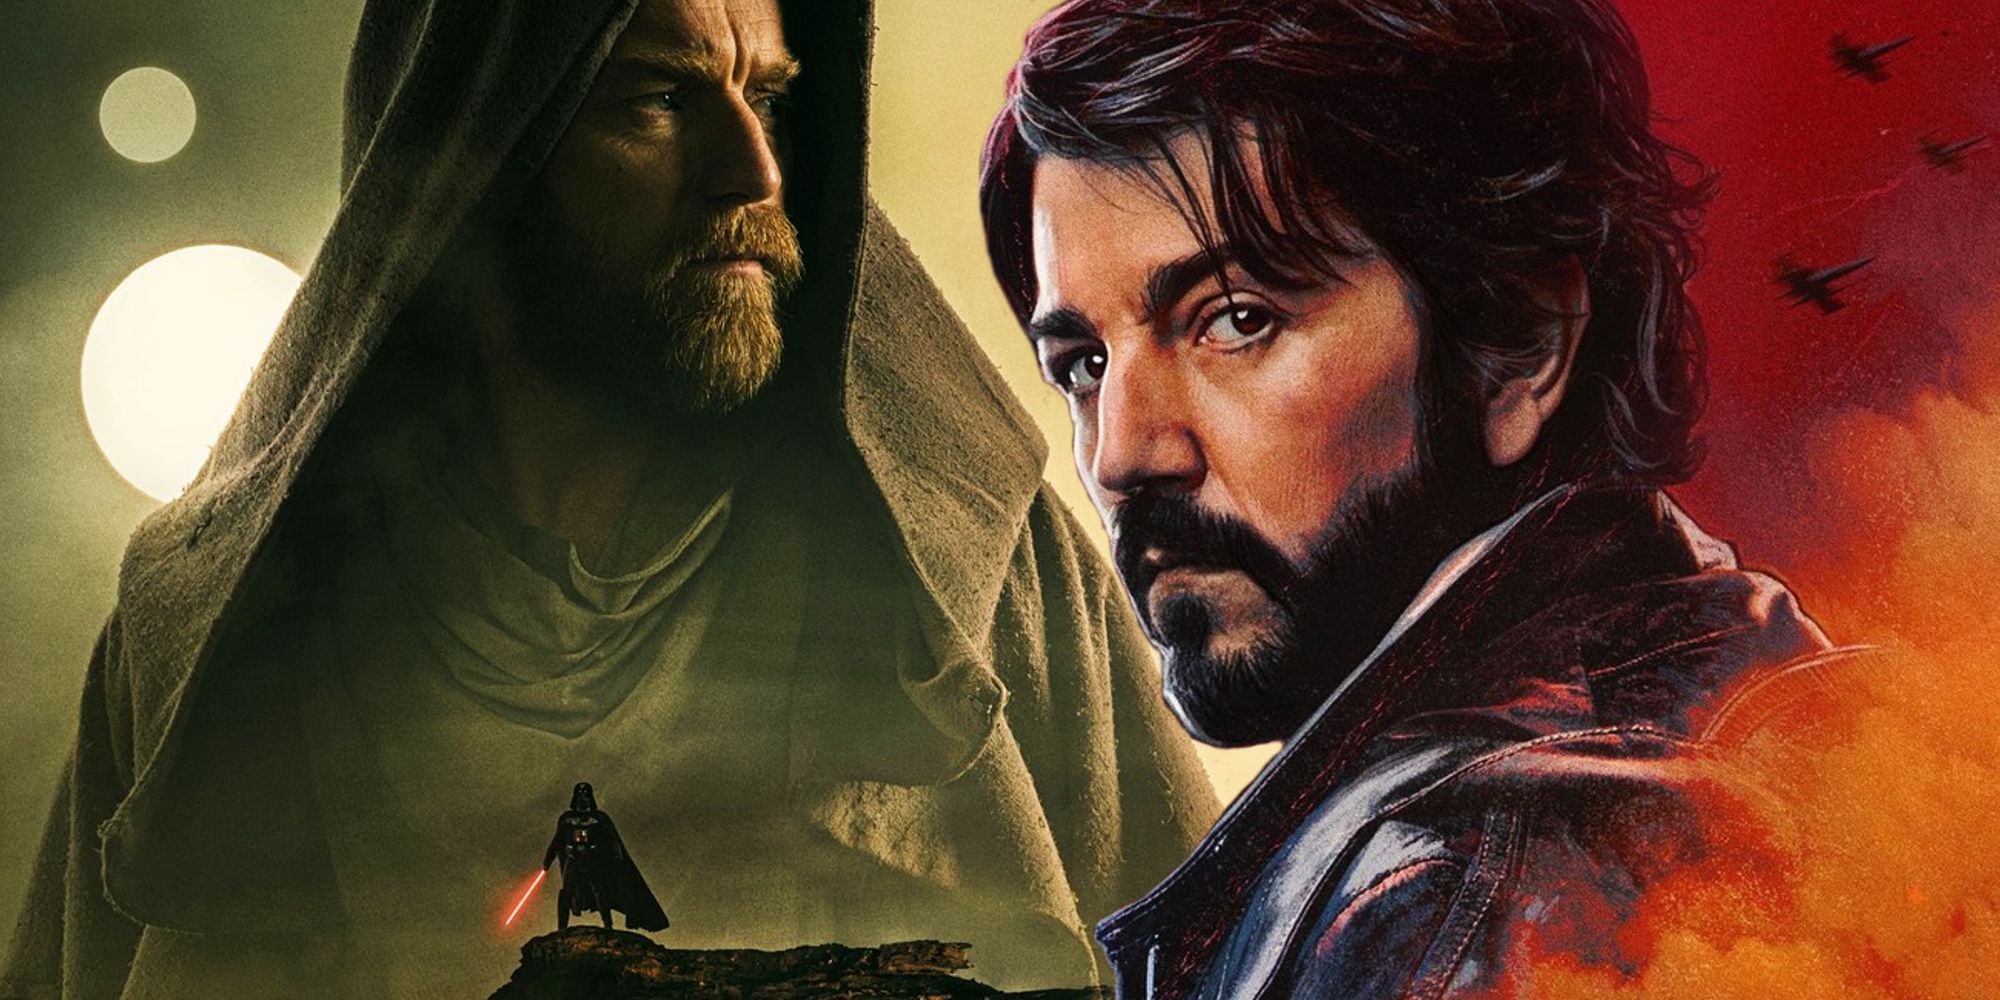 The posters for Obi-Wan Kenobi season 1 and Andor season 1